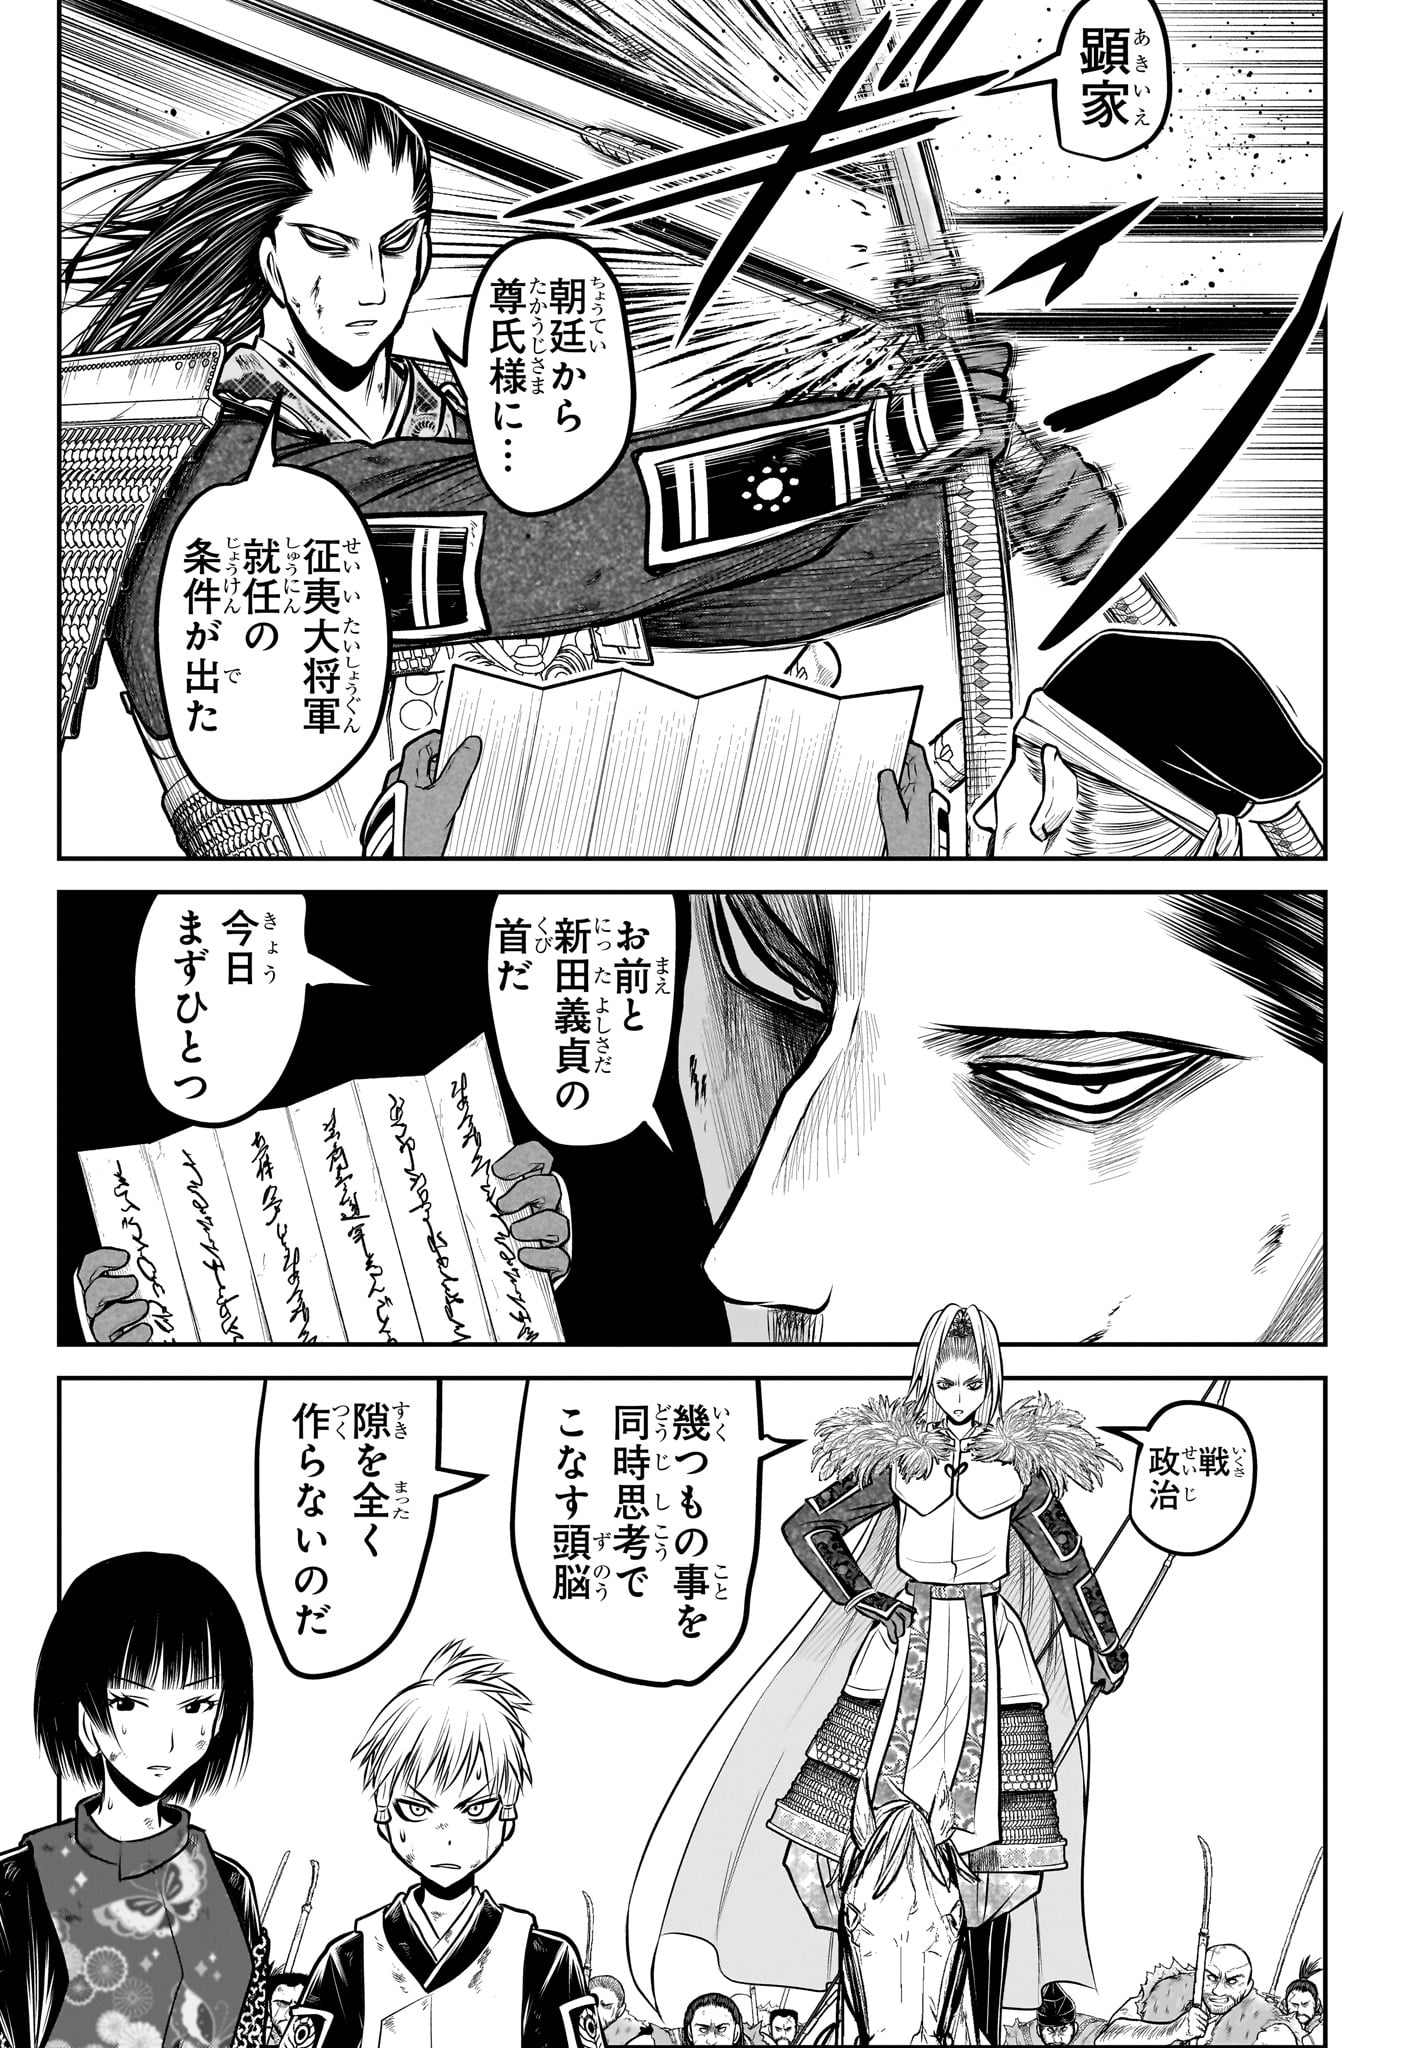 Nige Jouzu no Wakagimi - Chapter 163 - Page 10